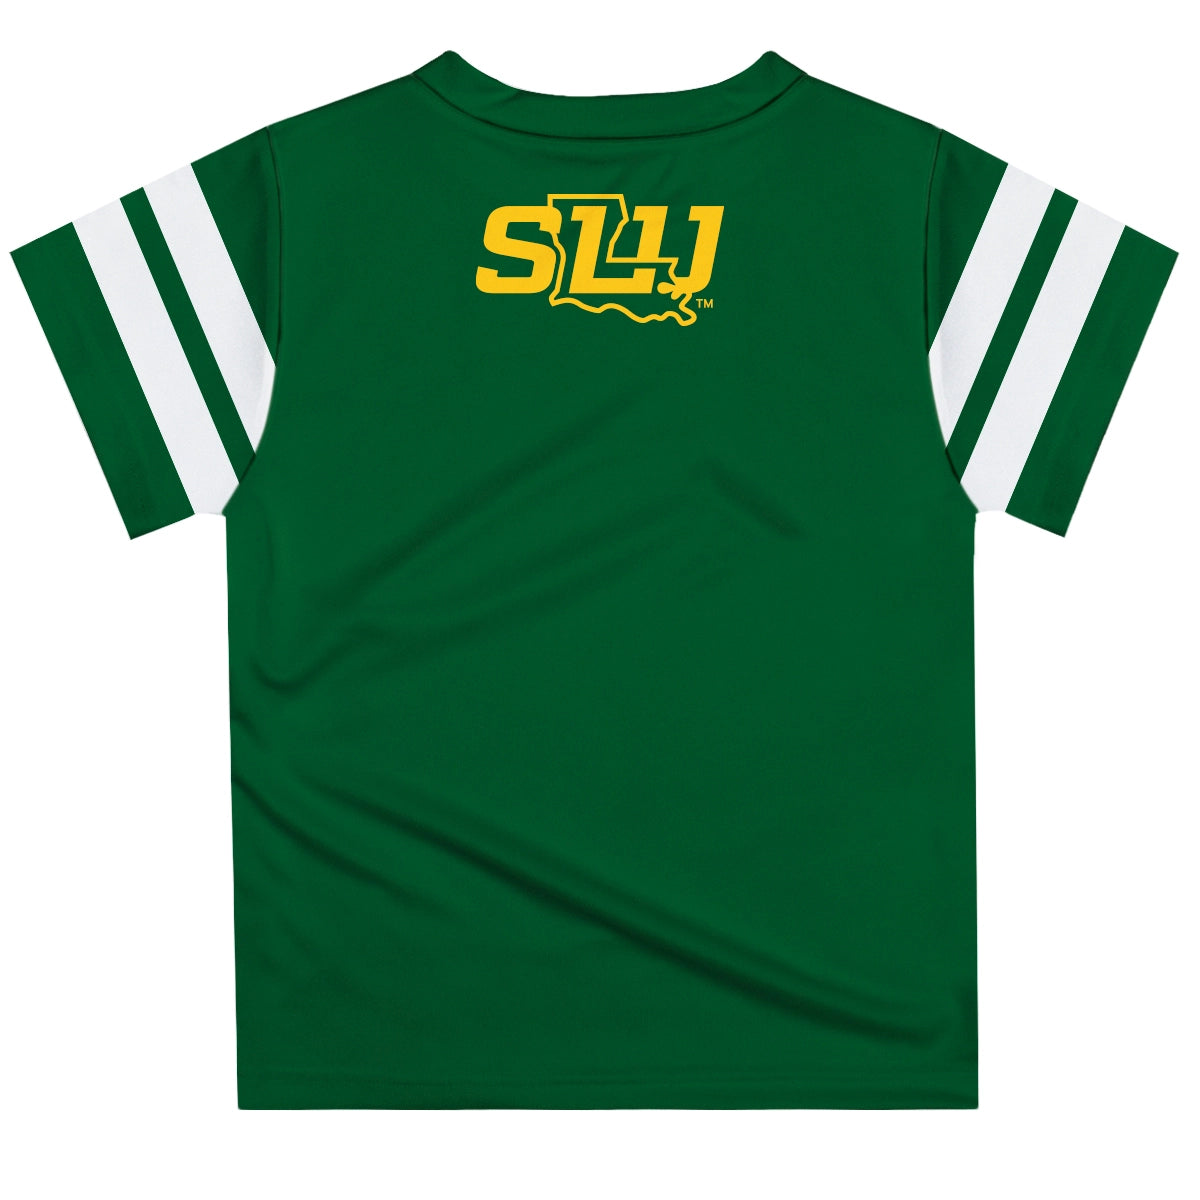 A Vive La Fete Southeastern Louisiana Lions Green T-Shirt Stripes On Sleeve.